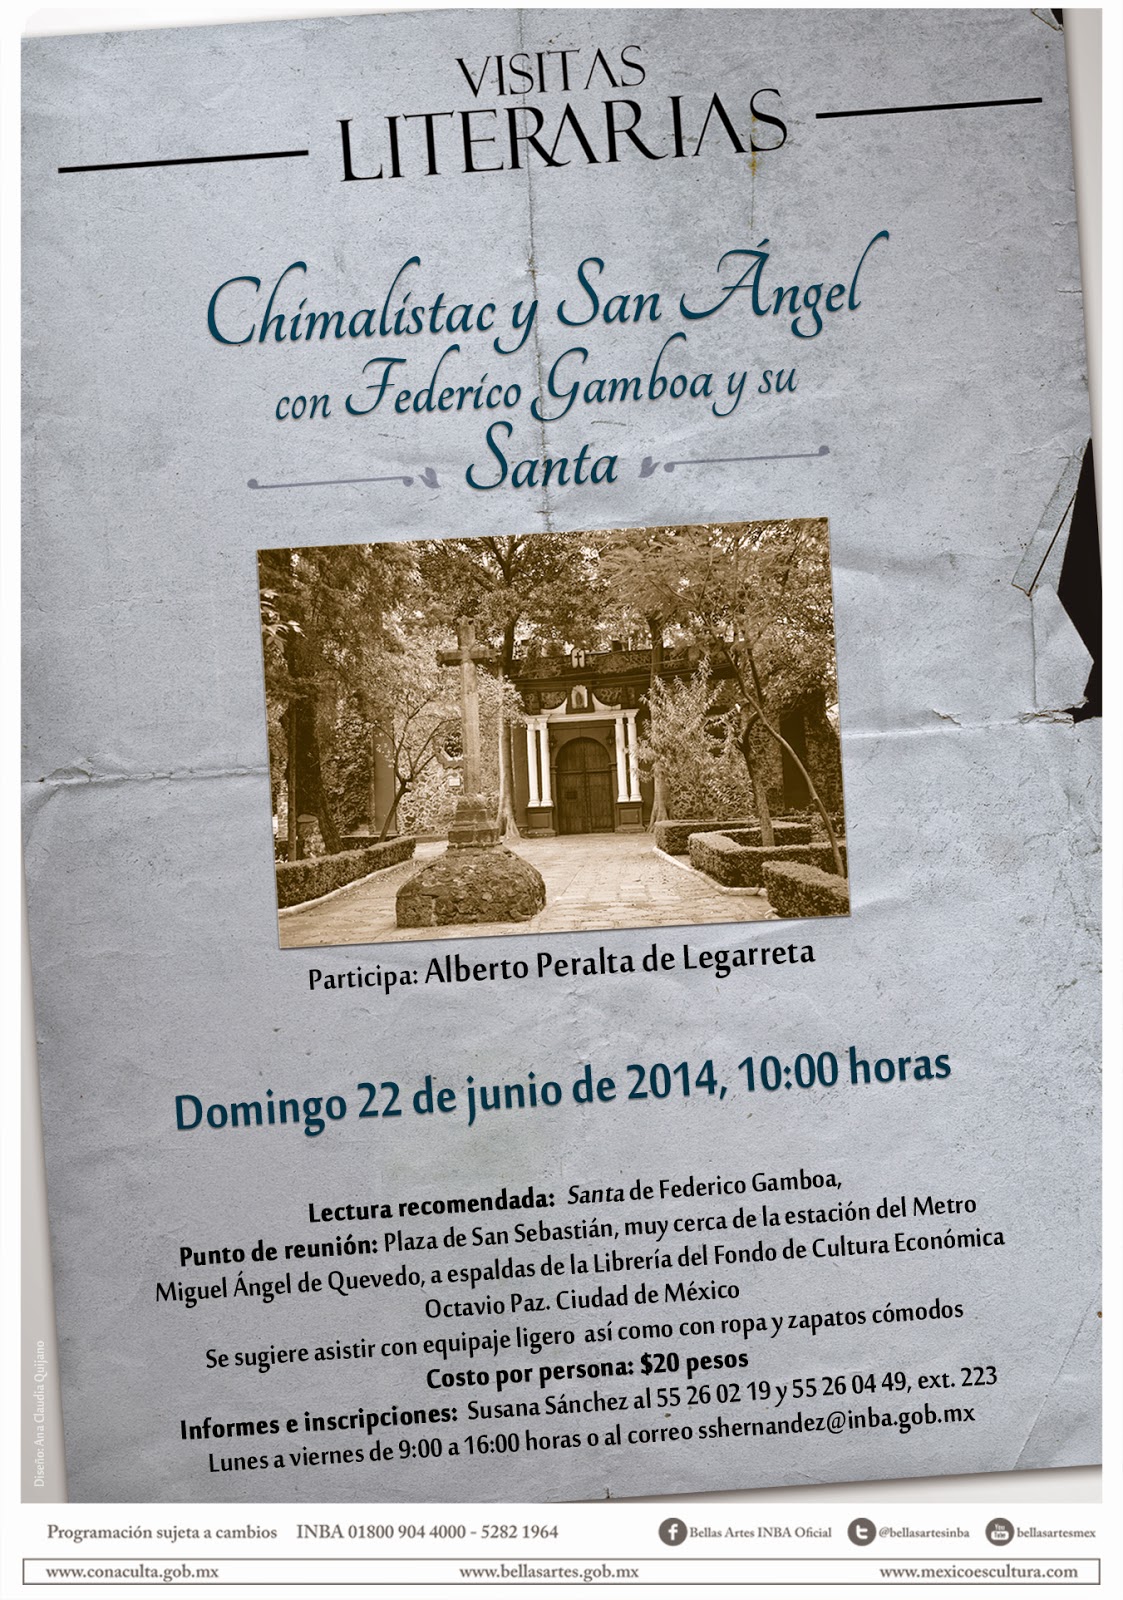 Visita literaria a San Ángel con Federico Gamboa